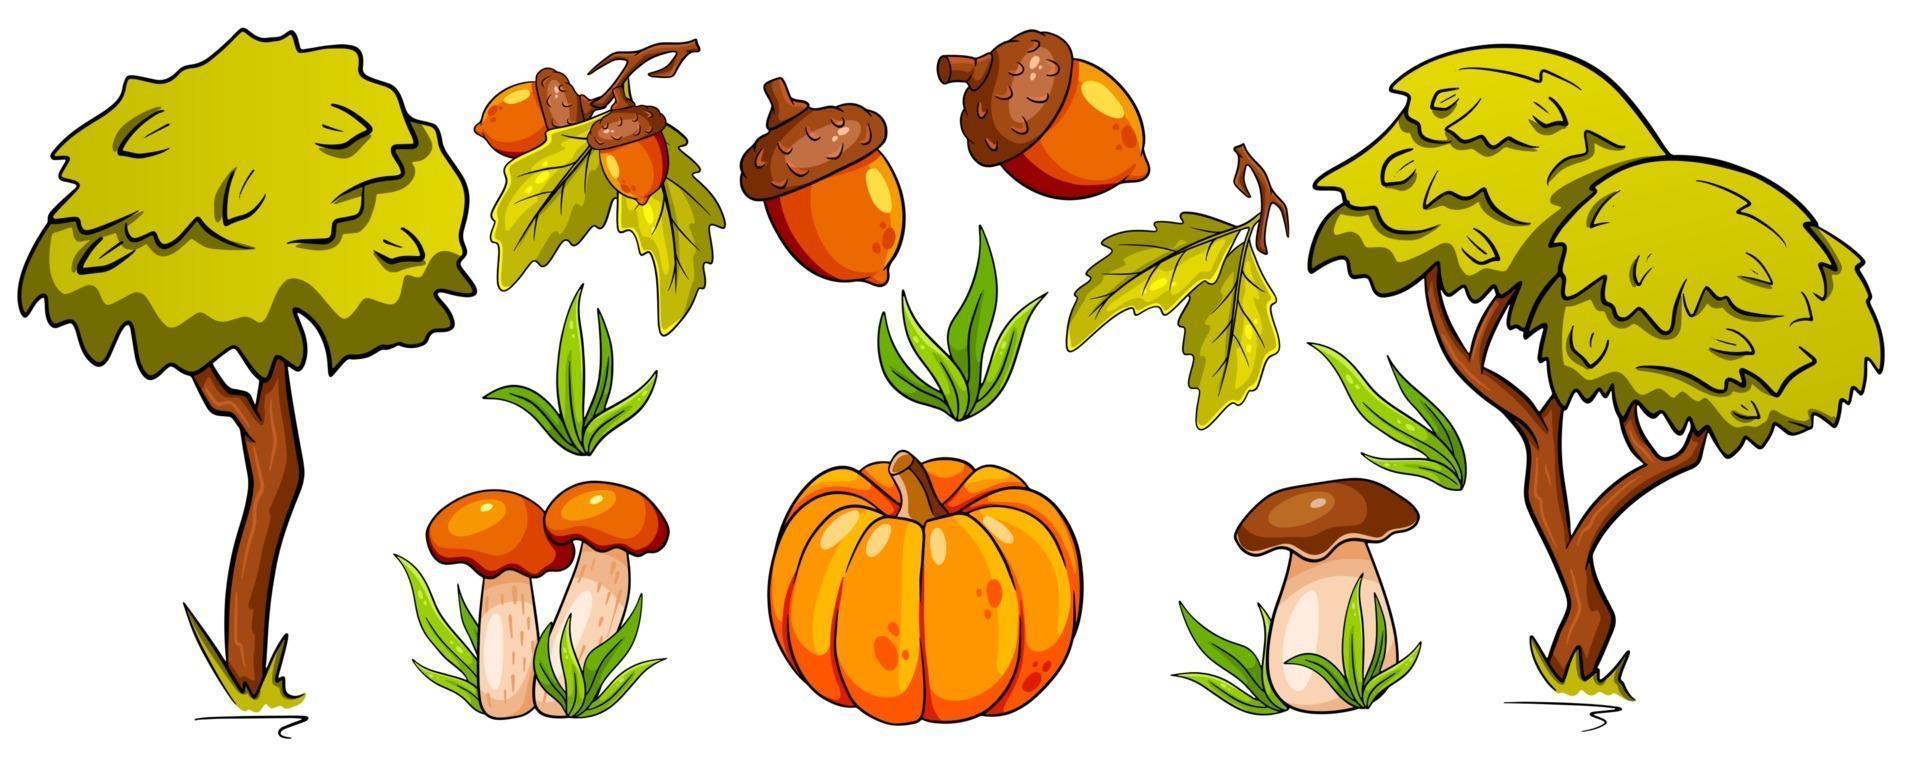 Autumn set. Mushrooms, pumpkin, acorns, grass, oak leaves, trees. vector